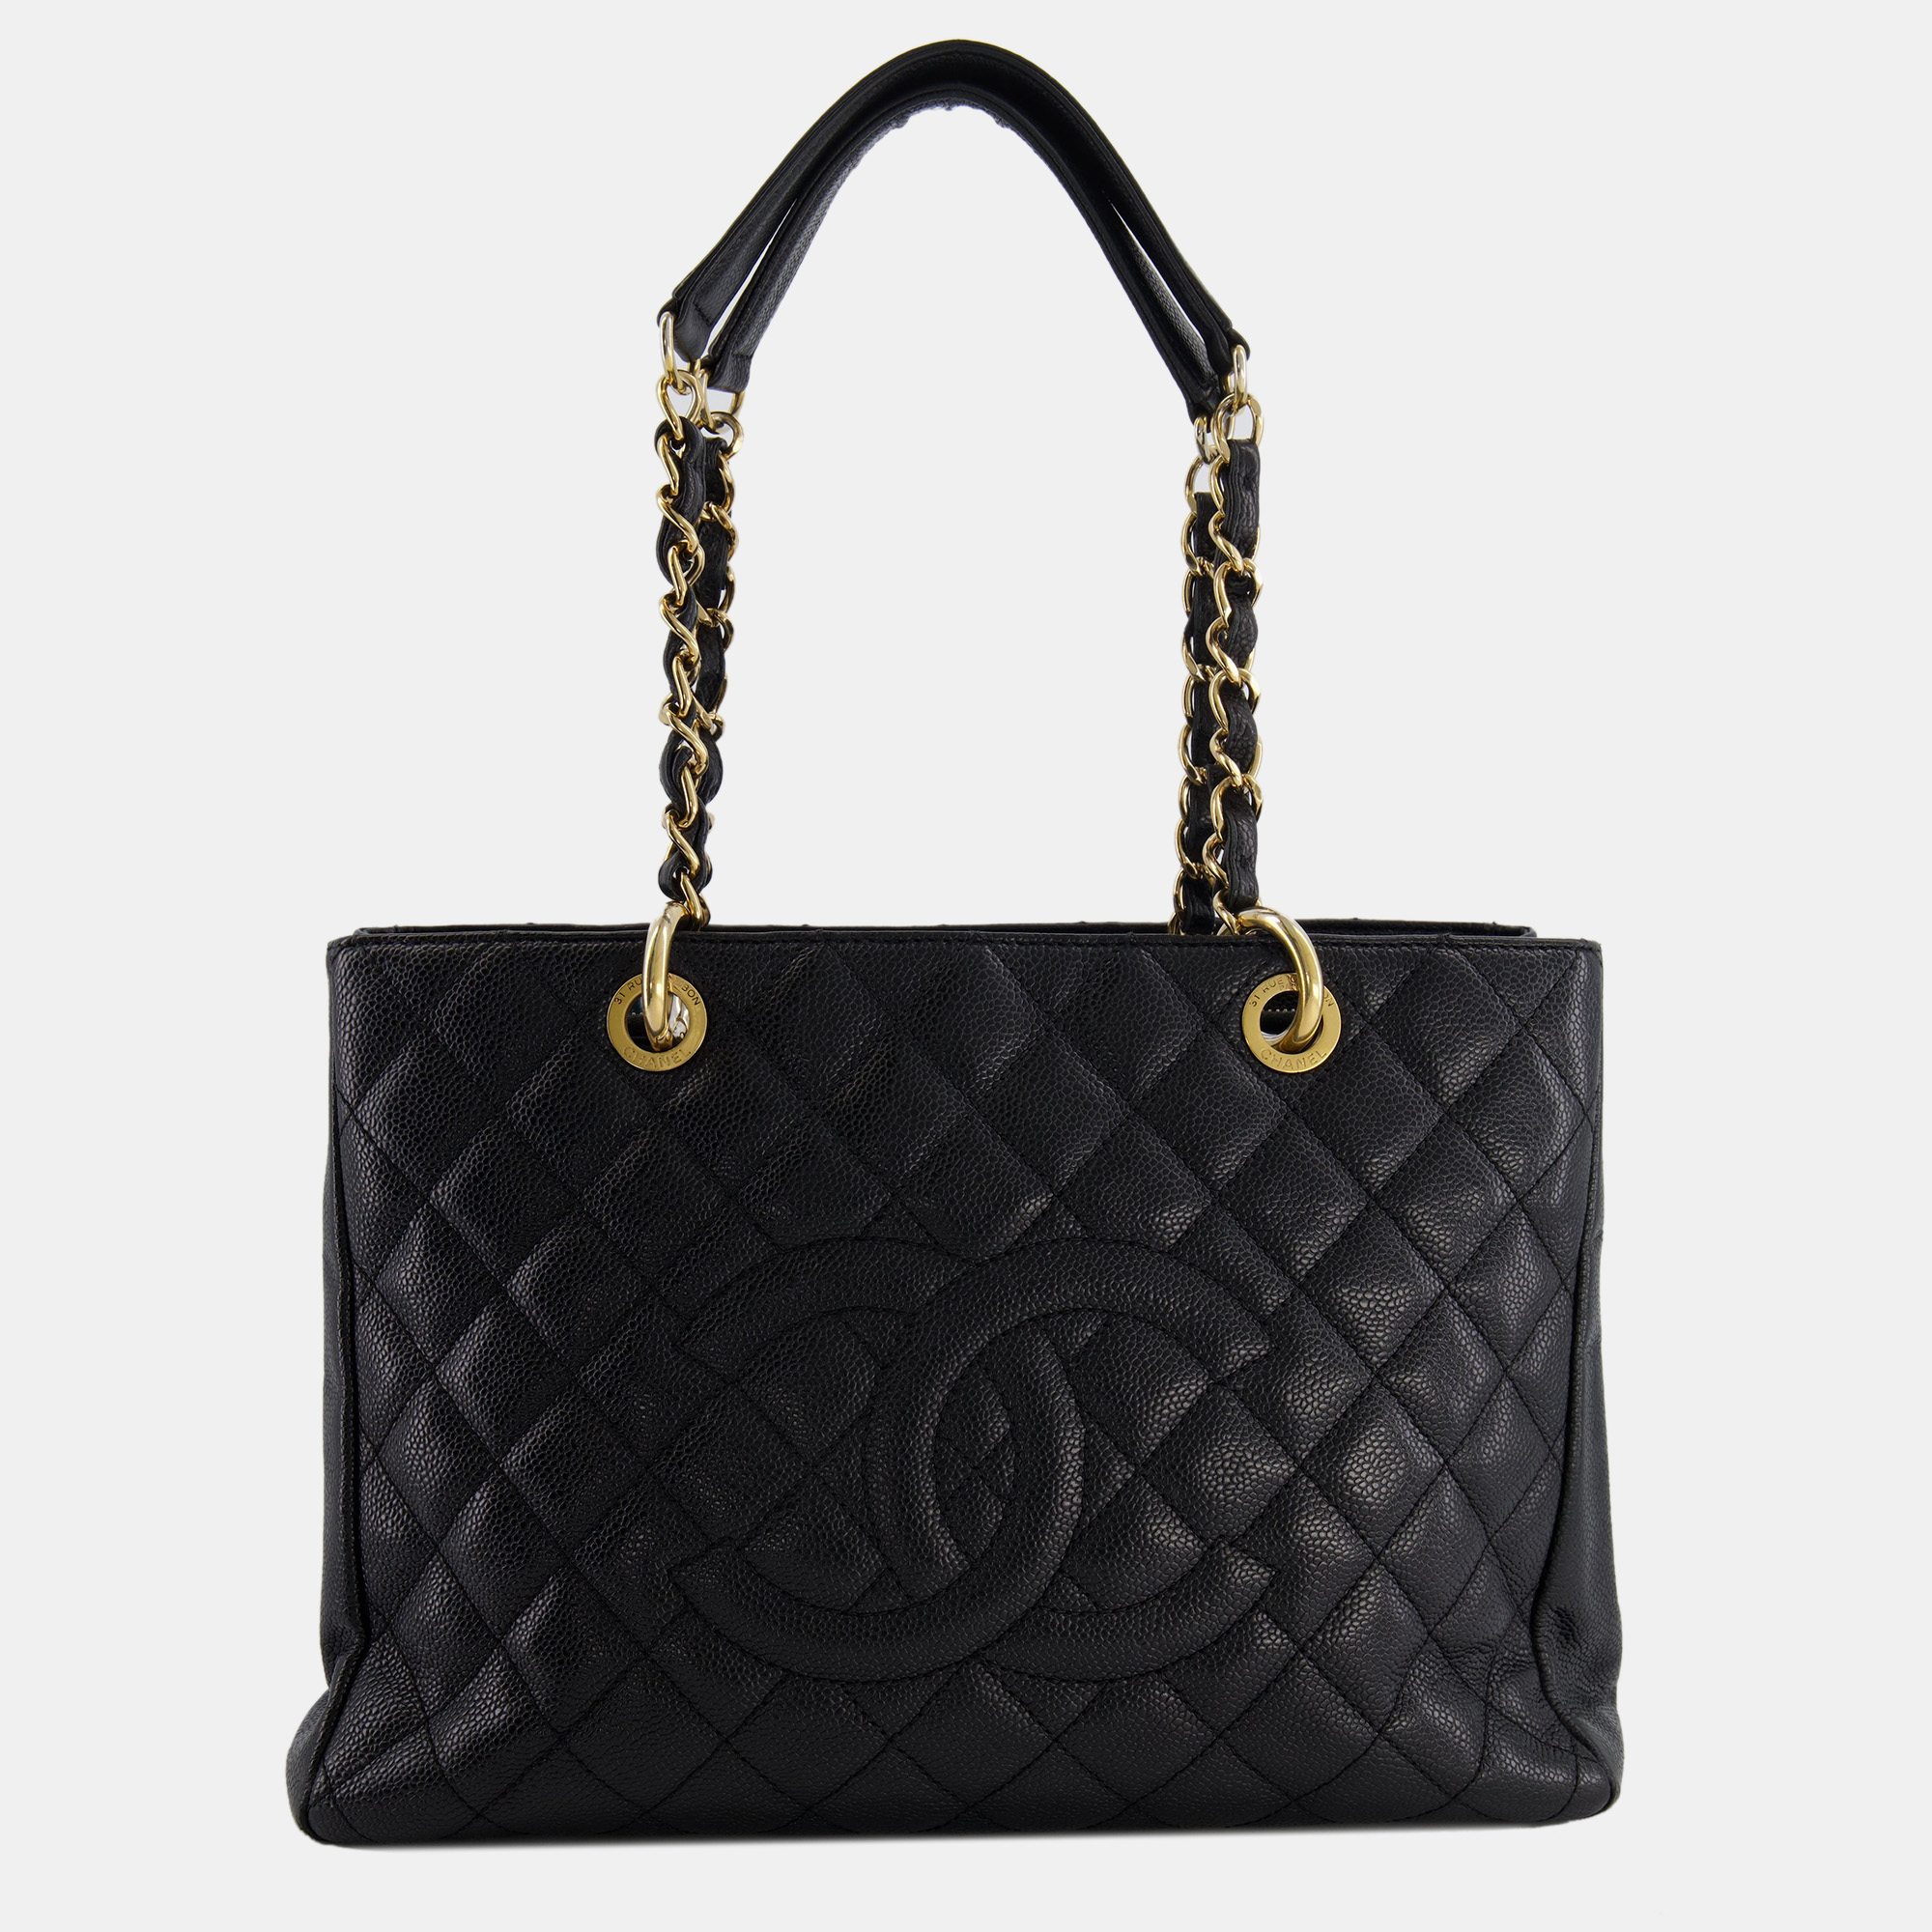 Chanel Black Caviar GST Grand Shopper Tote Bag With Gold Hardware